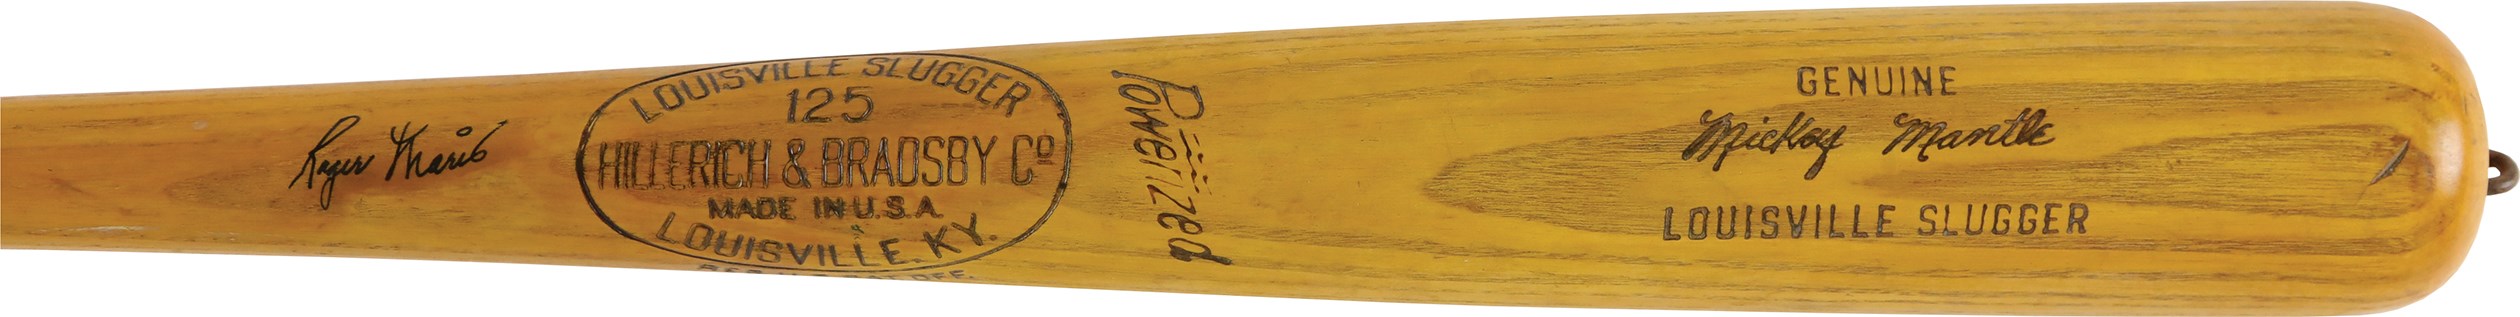 - 1958 Mickey Mantle Professional Model Bat Signed by Roger Maris - Rookie Era Signature (PSA)